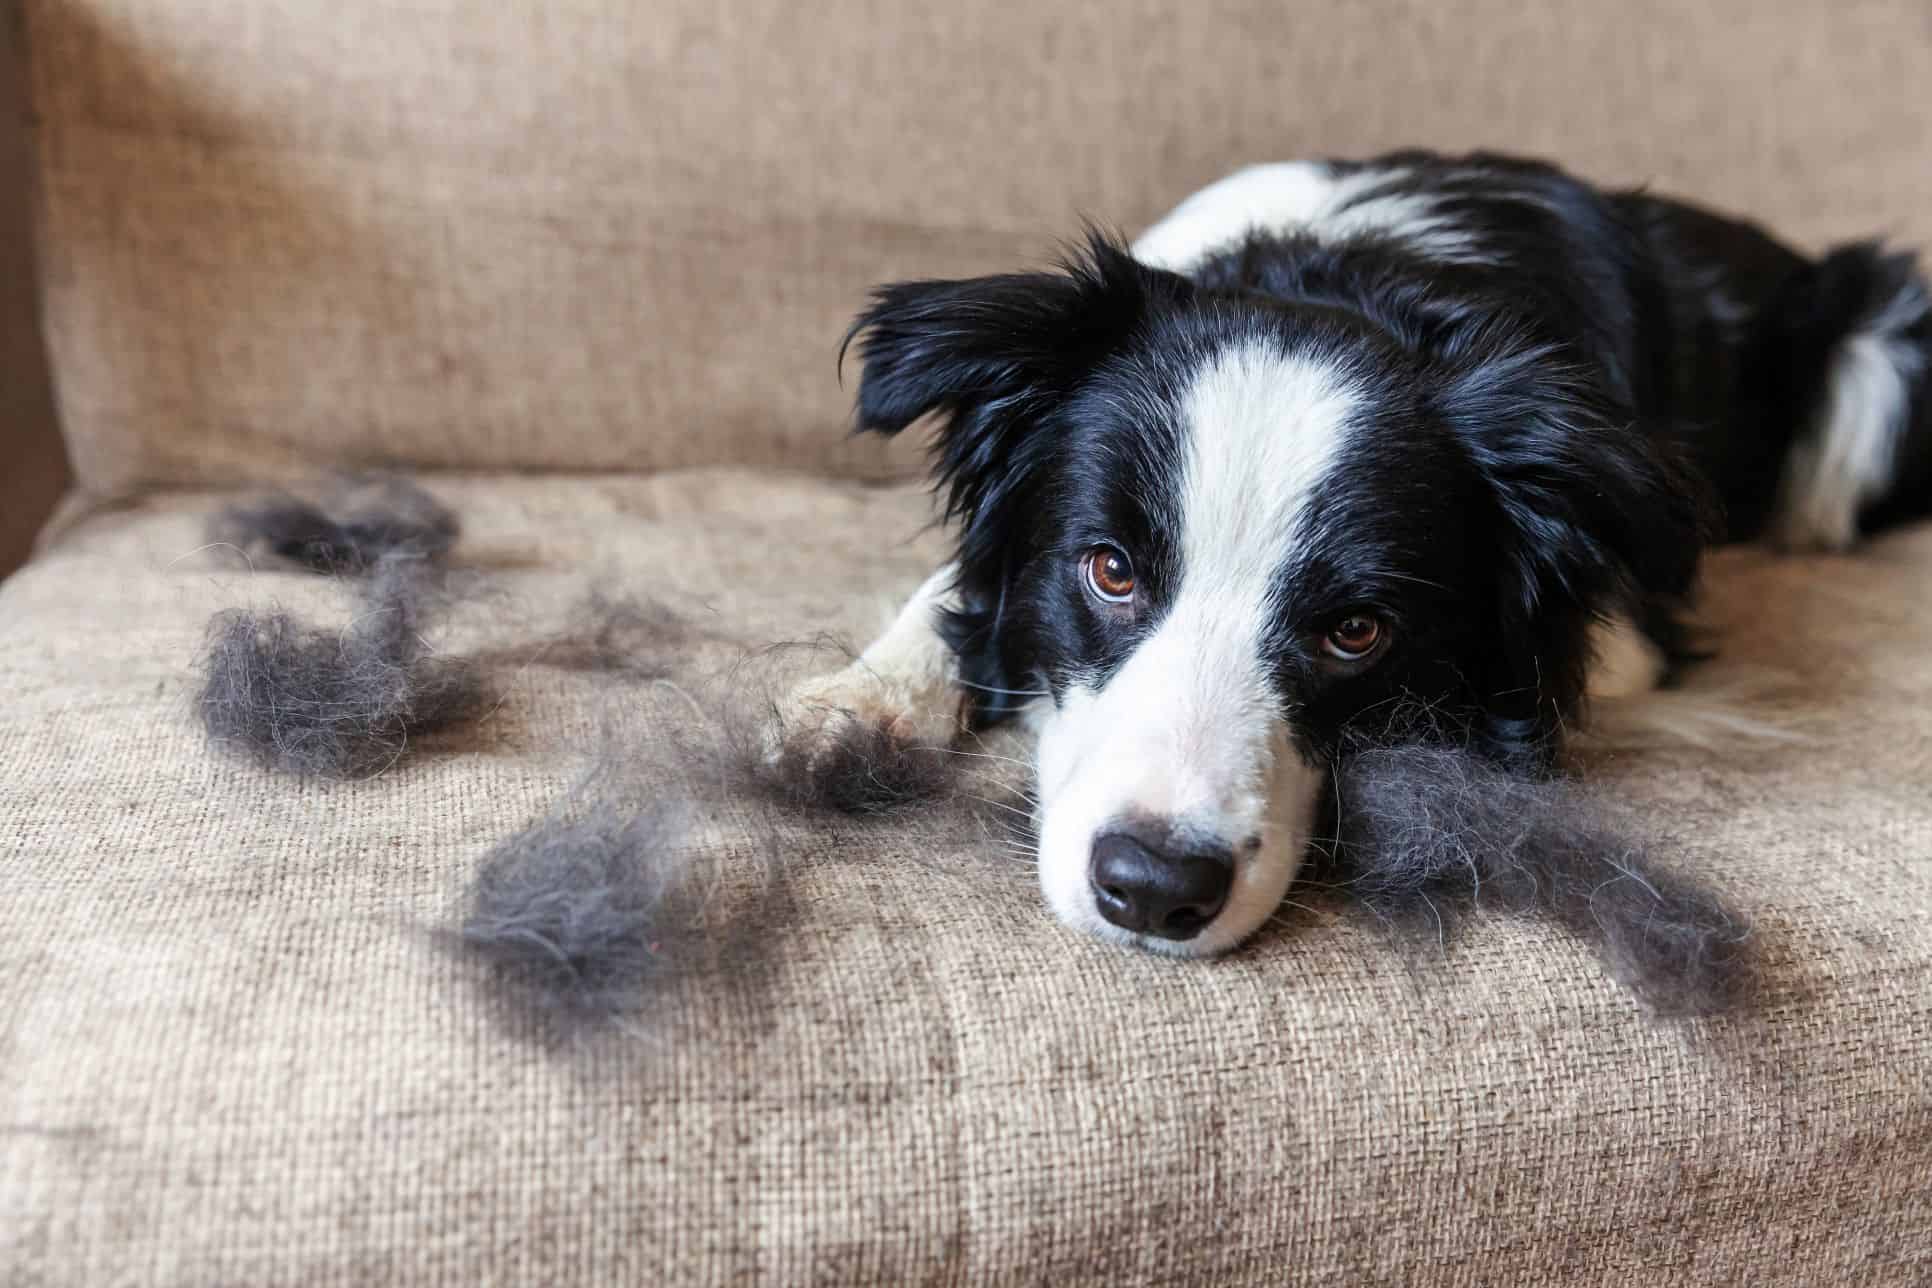 The Fall Shed: Managing Your Pet’s Seasonal Hair Loss